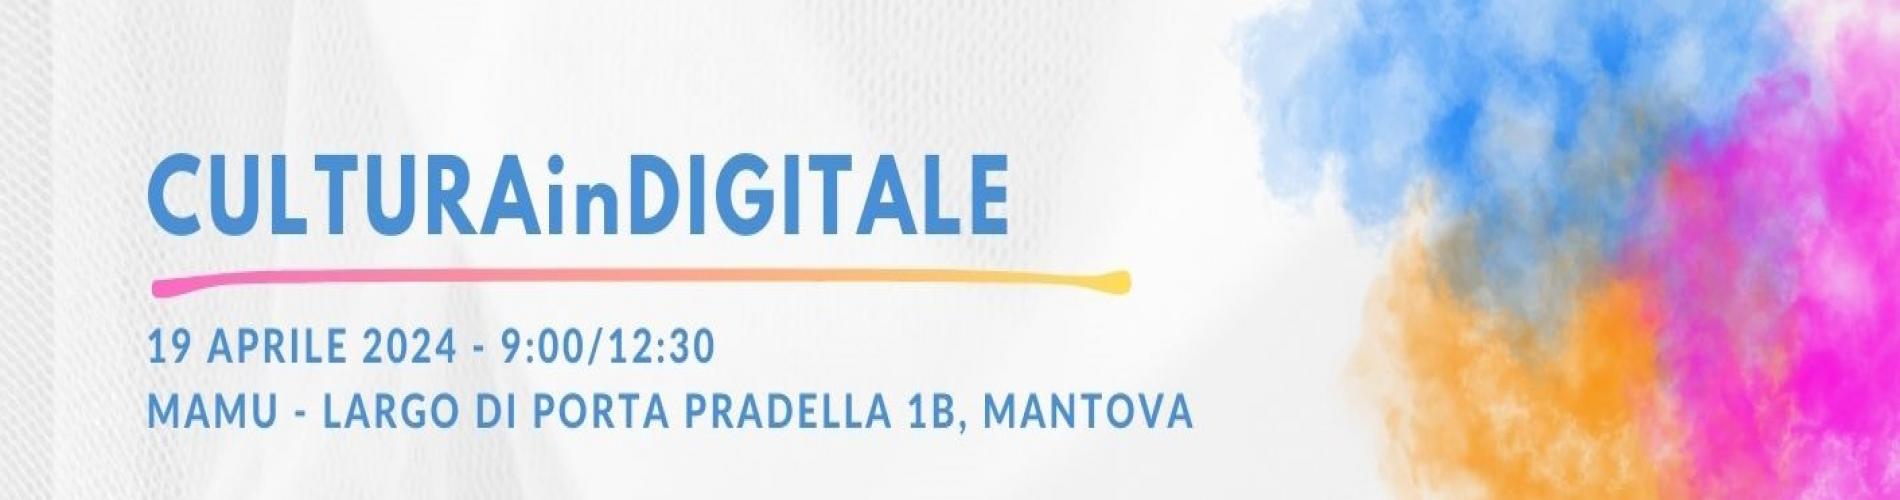 Cultura in digitale, evento Cultura in digitale Mantova, cultura